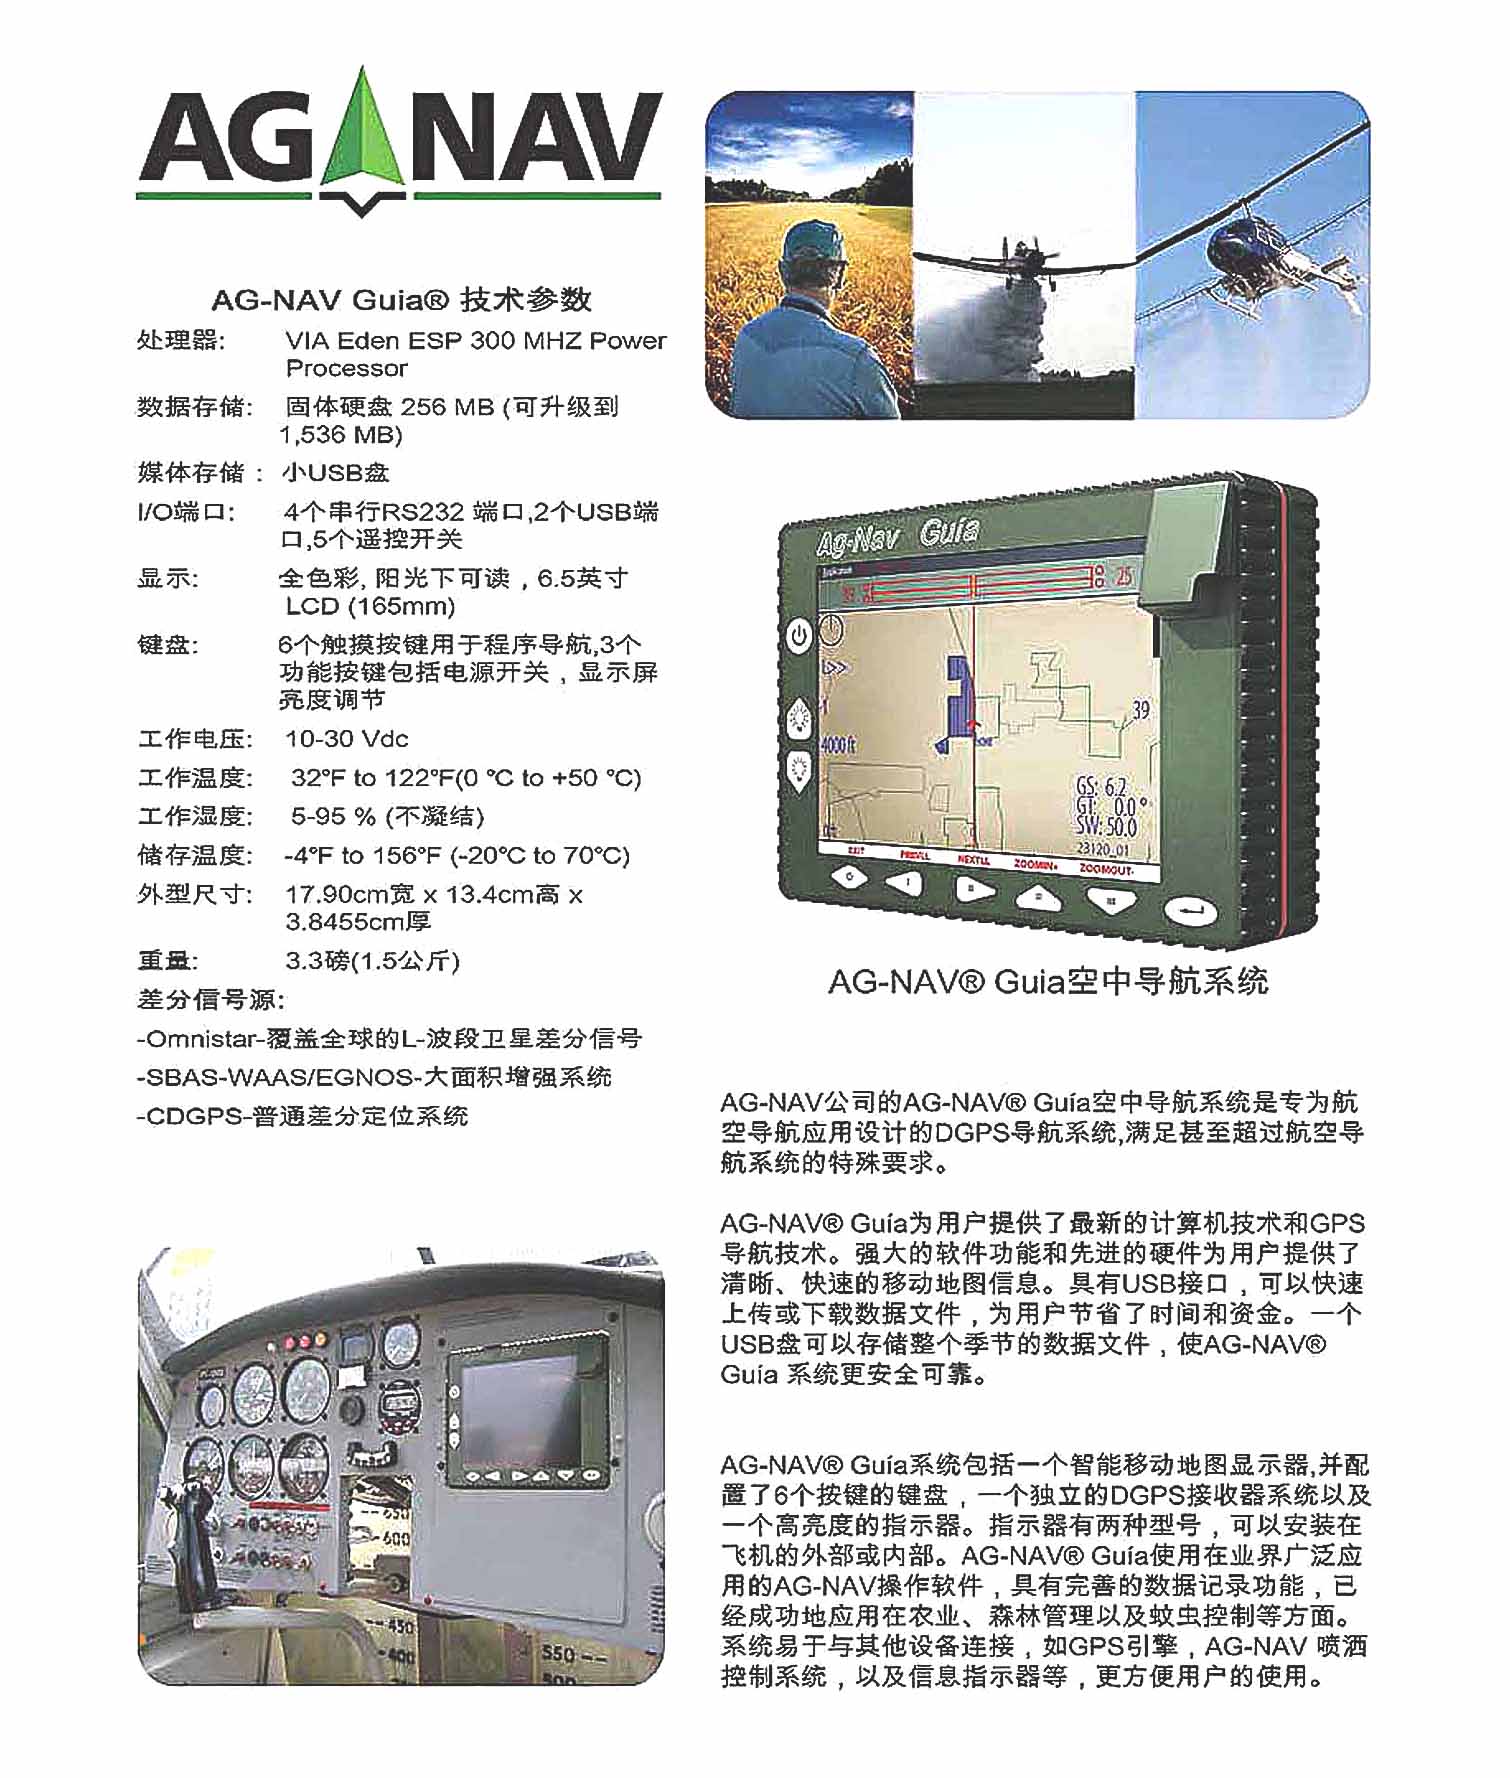 AG-NAV Guia 空中导航系统